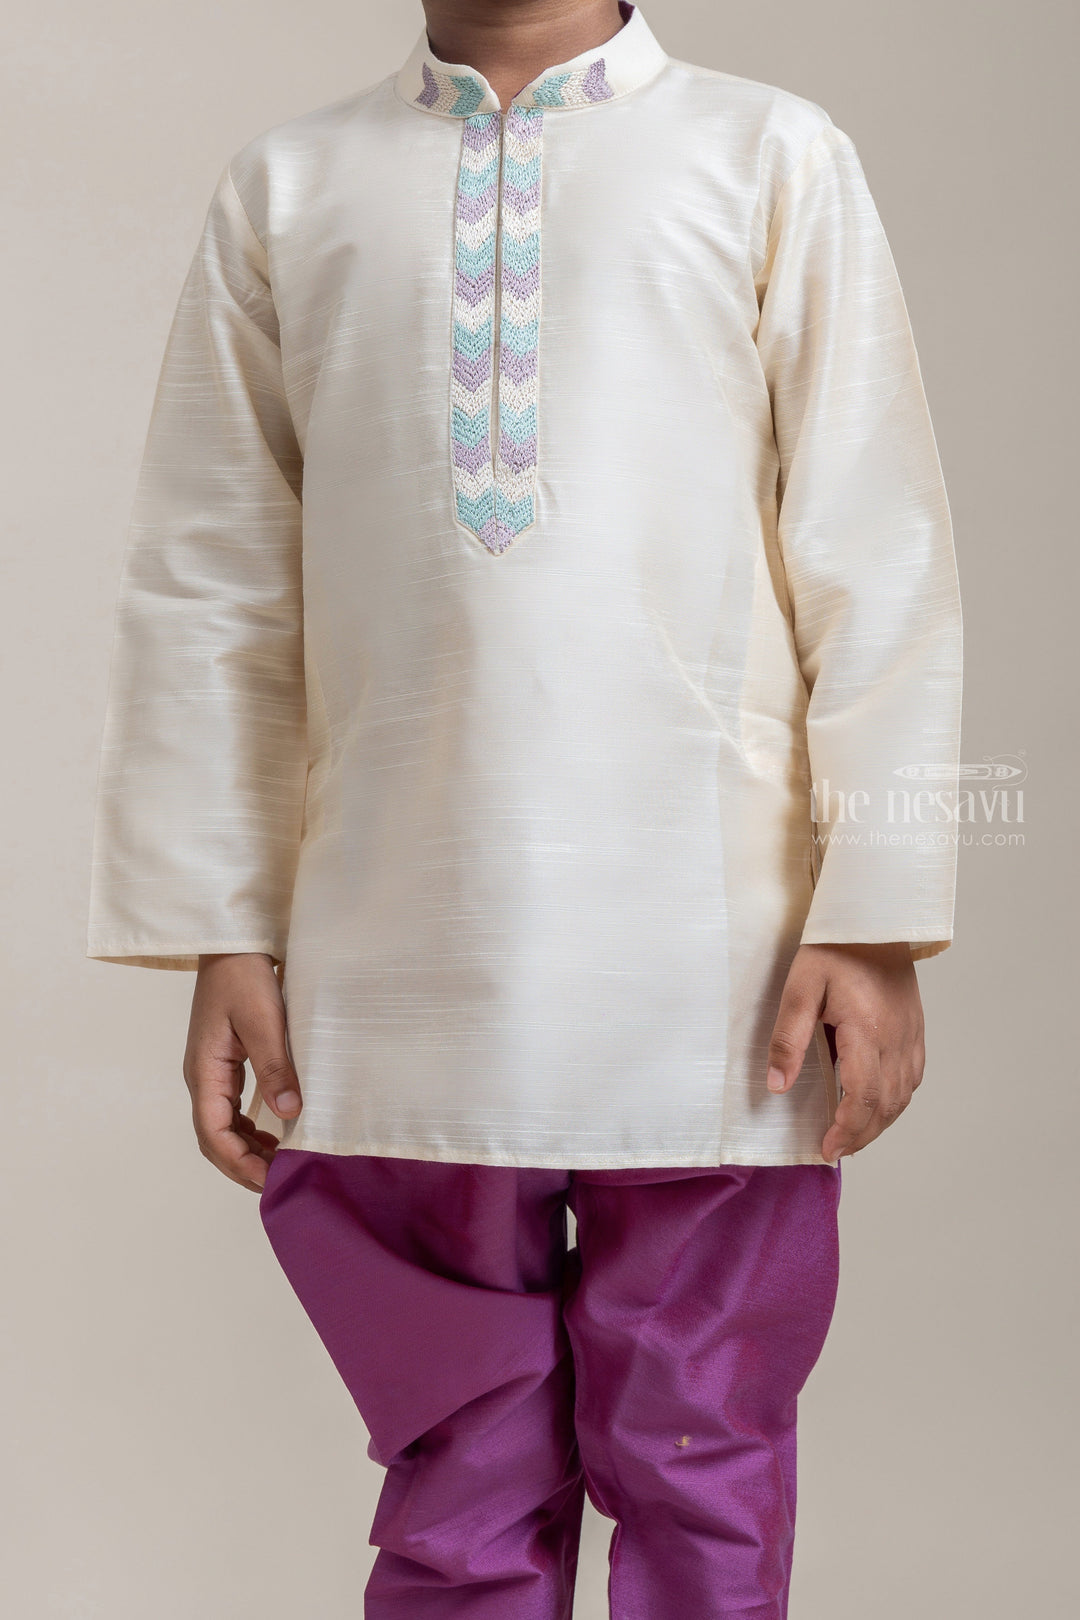 The Nesavu Ethnic Sets Traditional Geometric Embroidered Beige Kurta With Purple Pant For Boys psr silks Nesavu